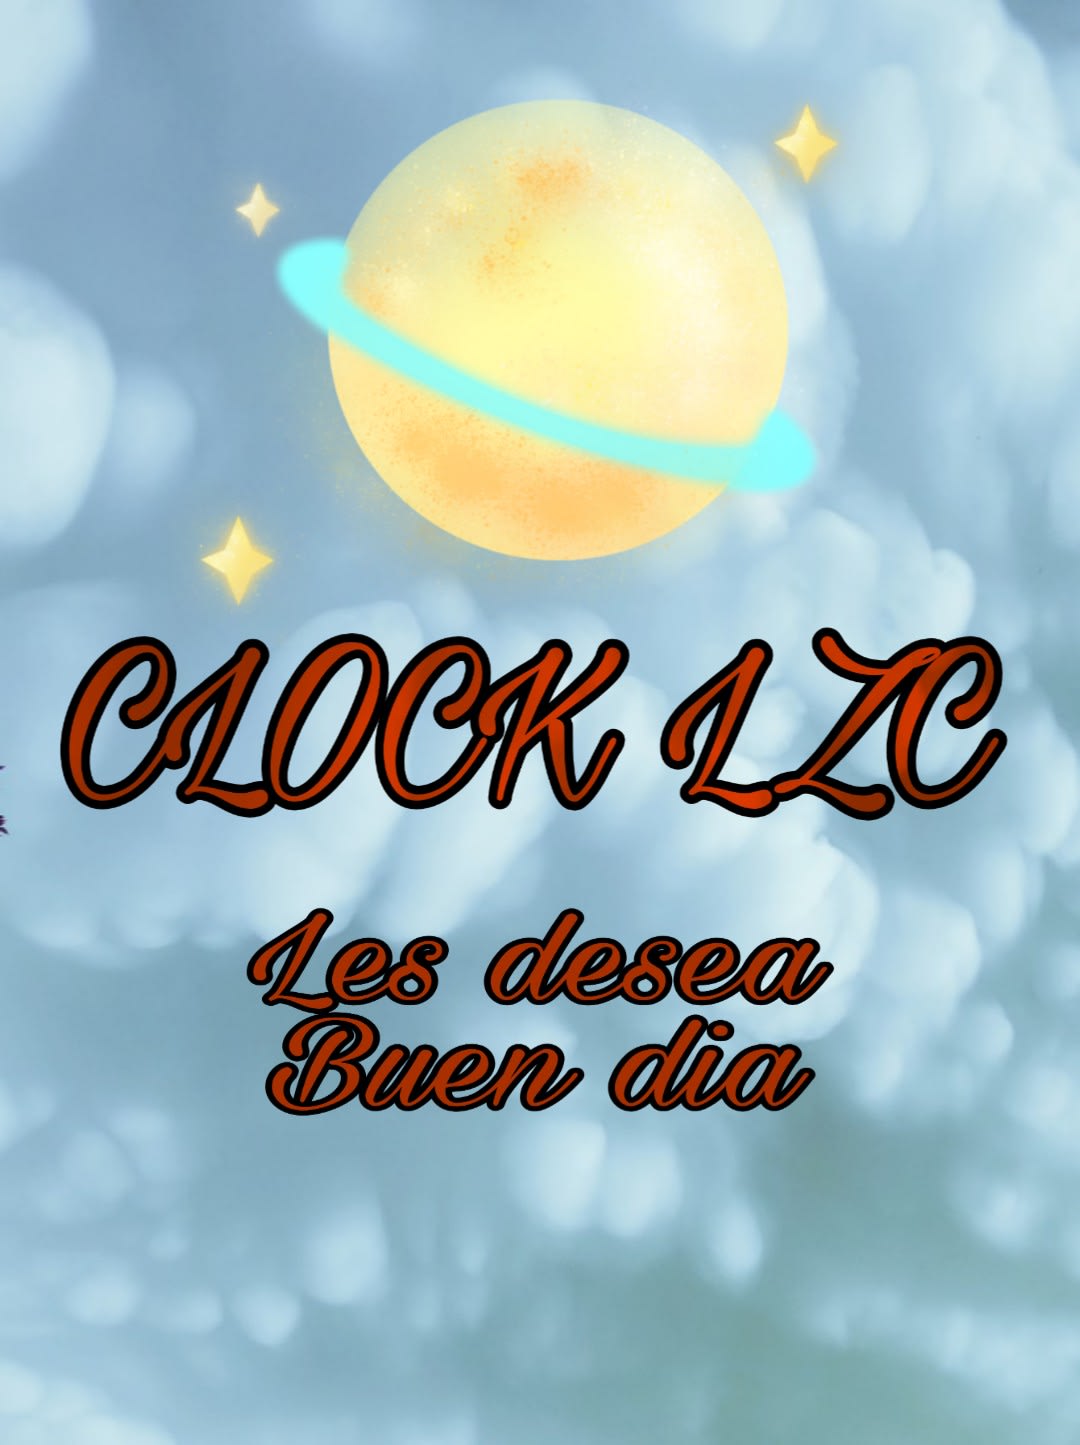 Clock Lzc